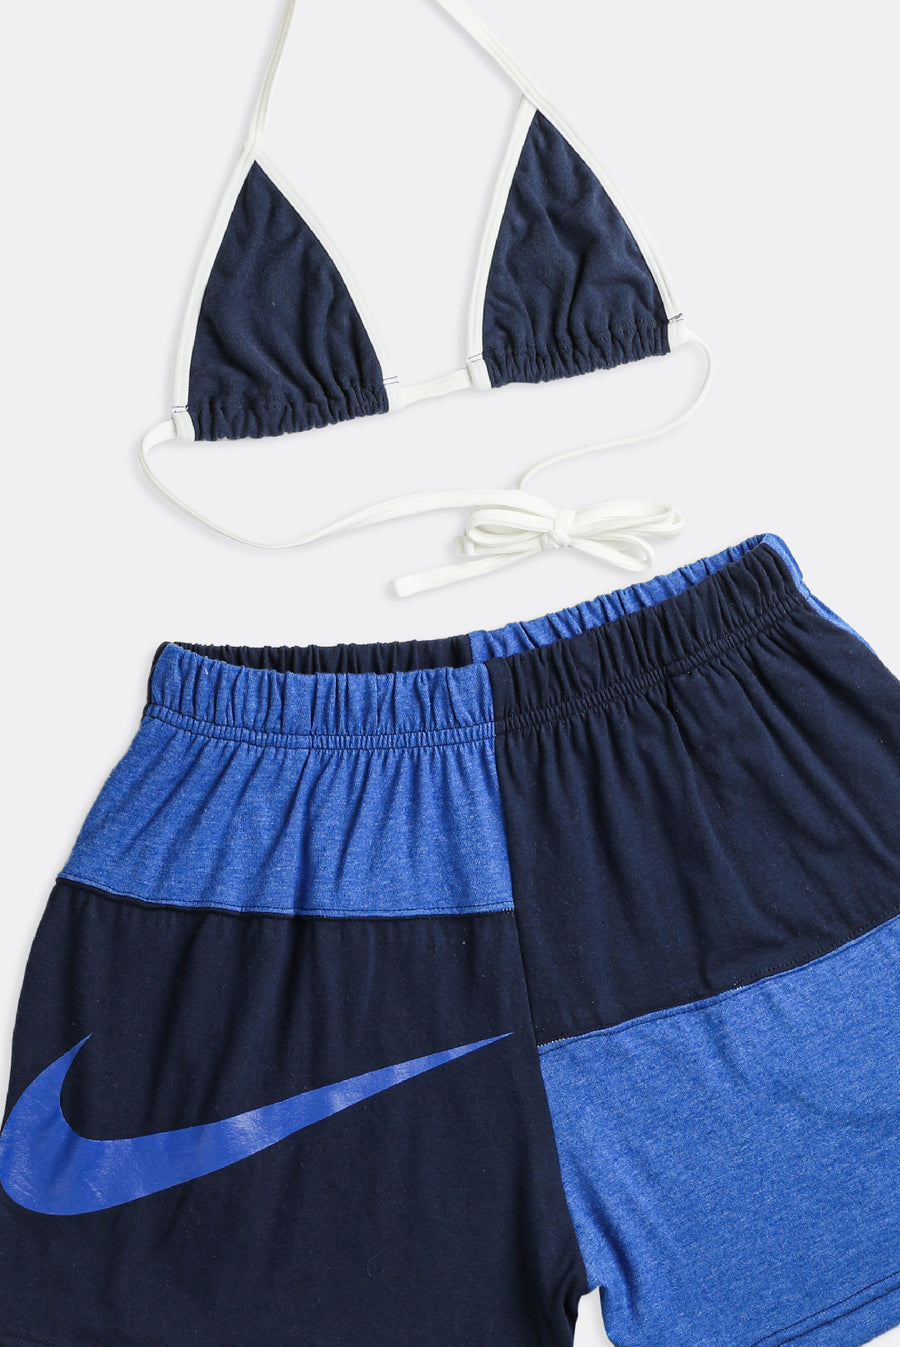 Rework Nike Patchwork Tee Shorts Set - S